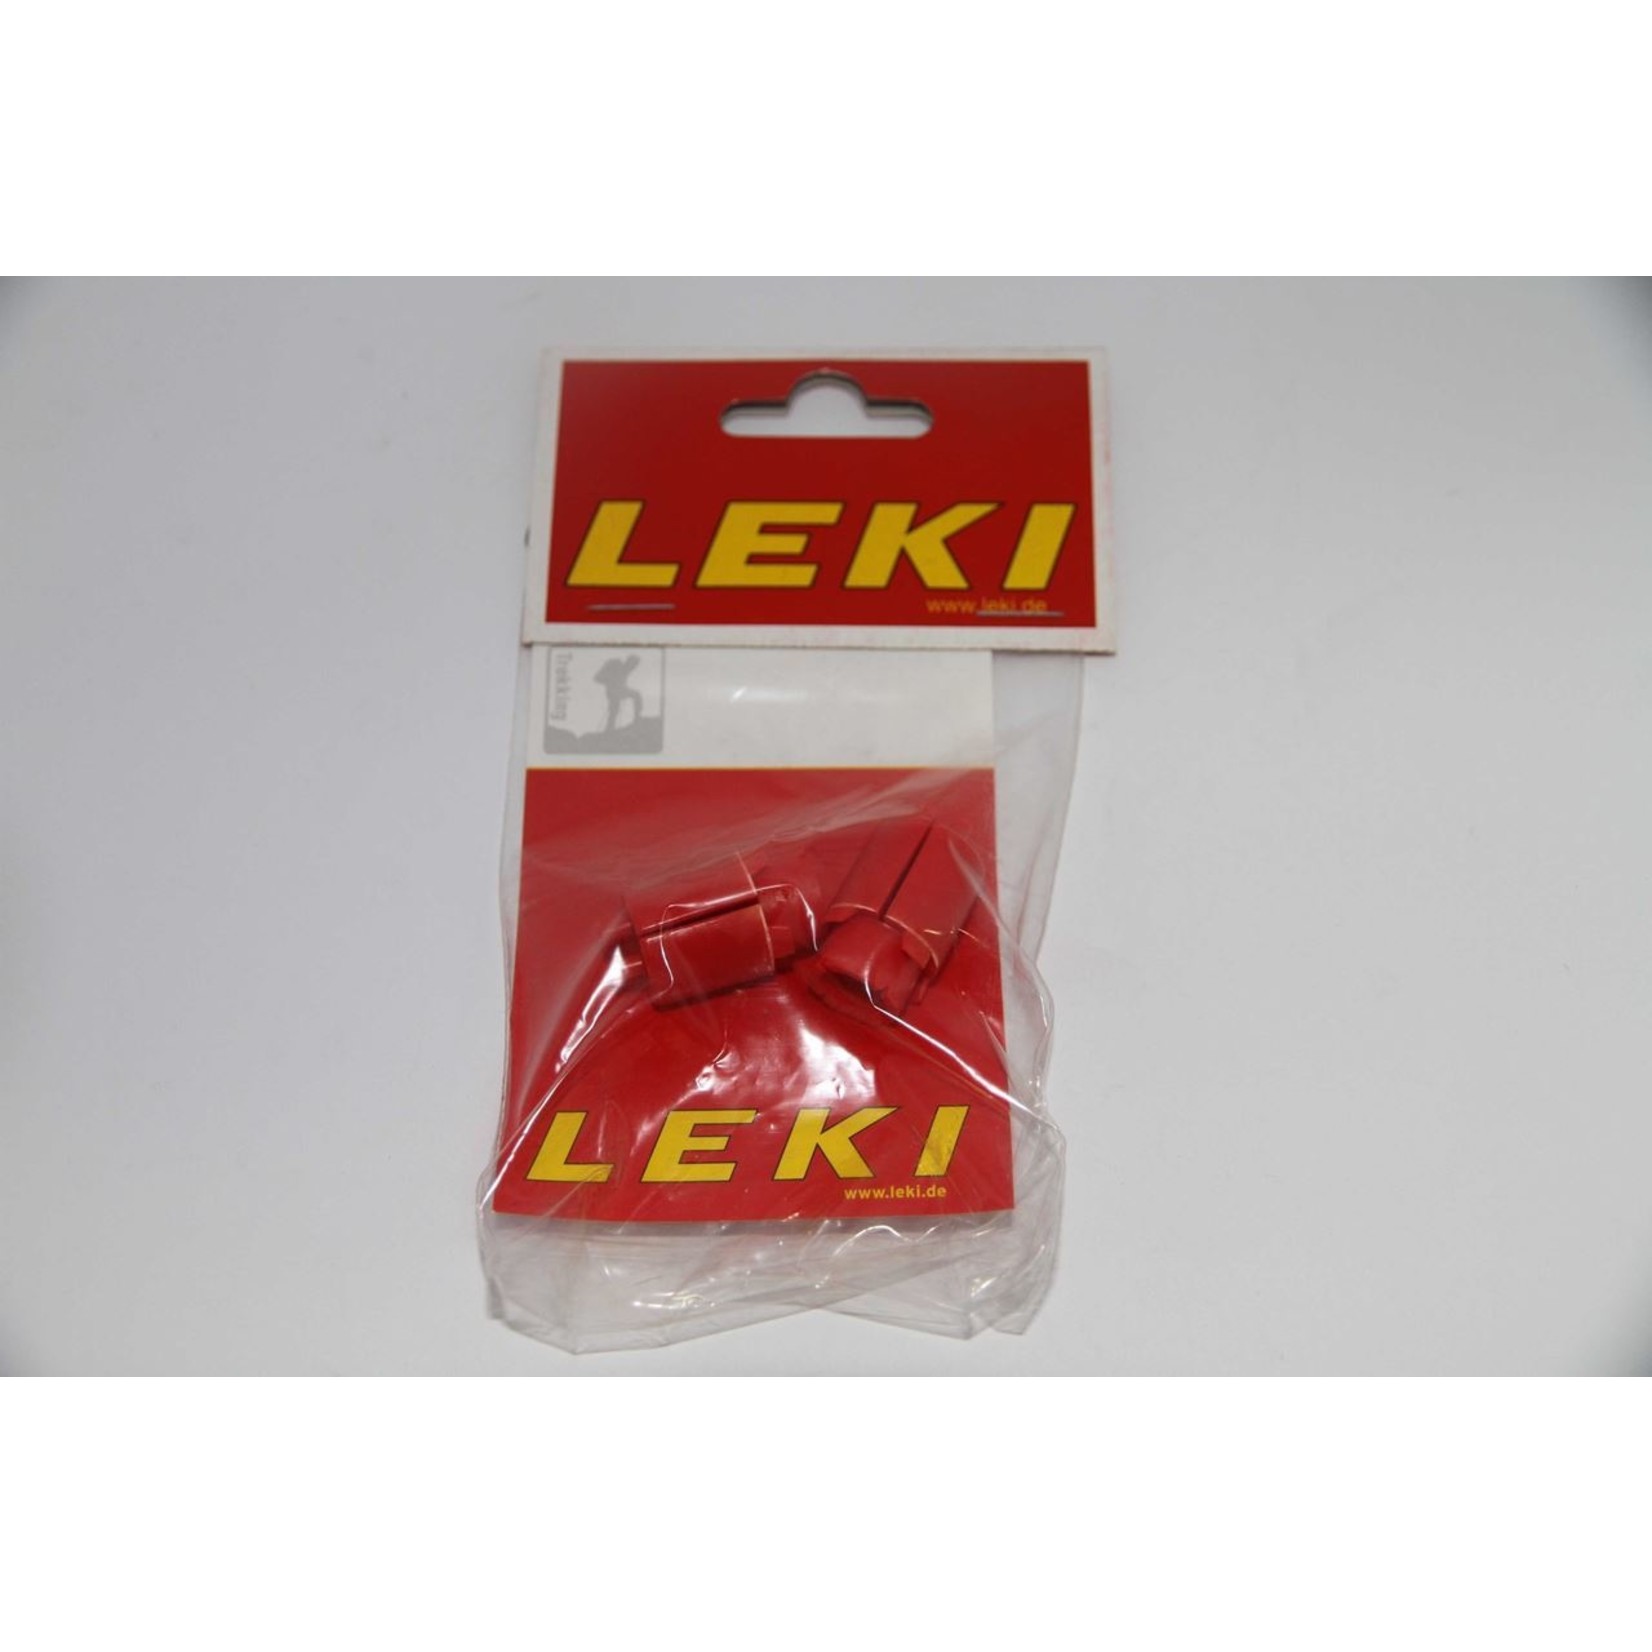 Leki Leki 880000106 SP Expander Classic - Red - 16mm